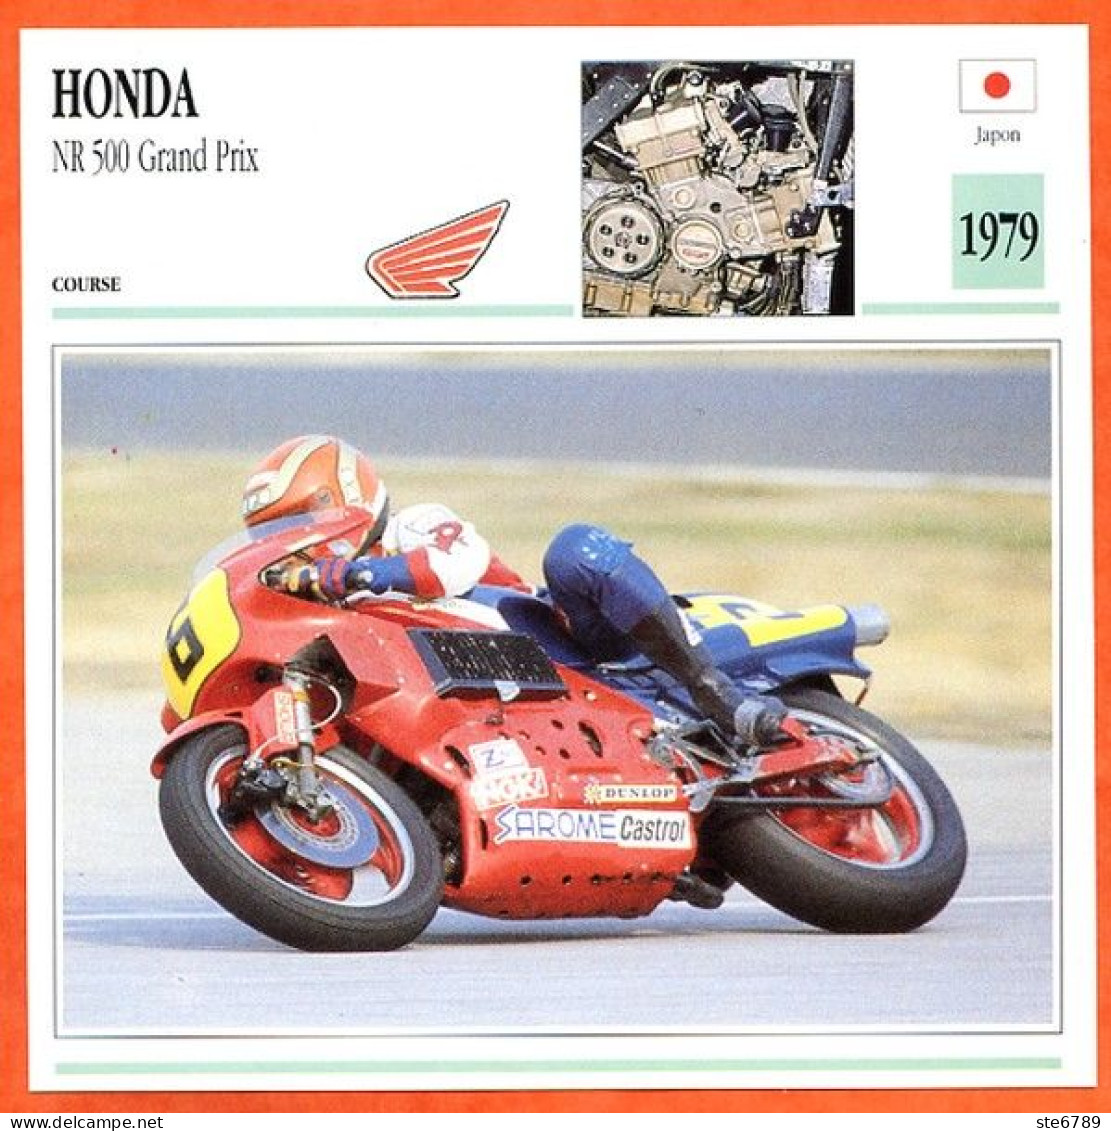 HONDA NR 500 Grand Prix 1979 Japon Fiche Technique Moto - Sport